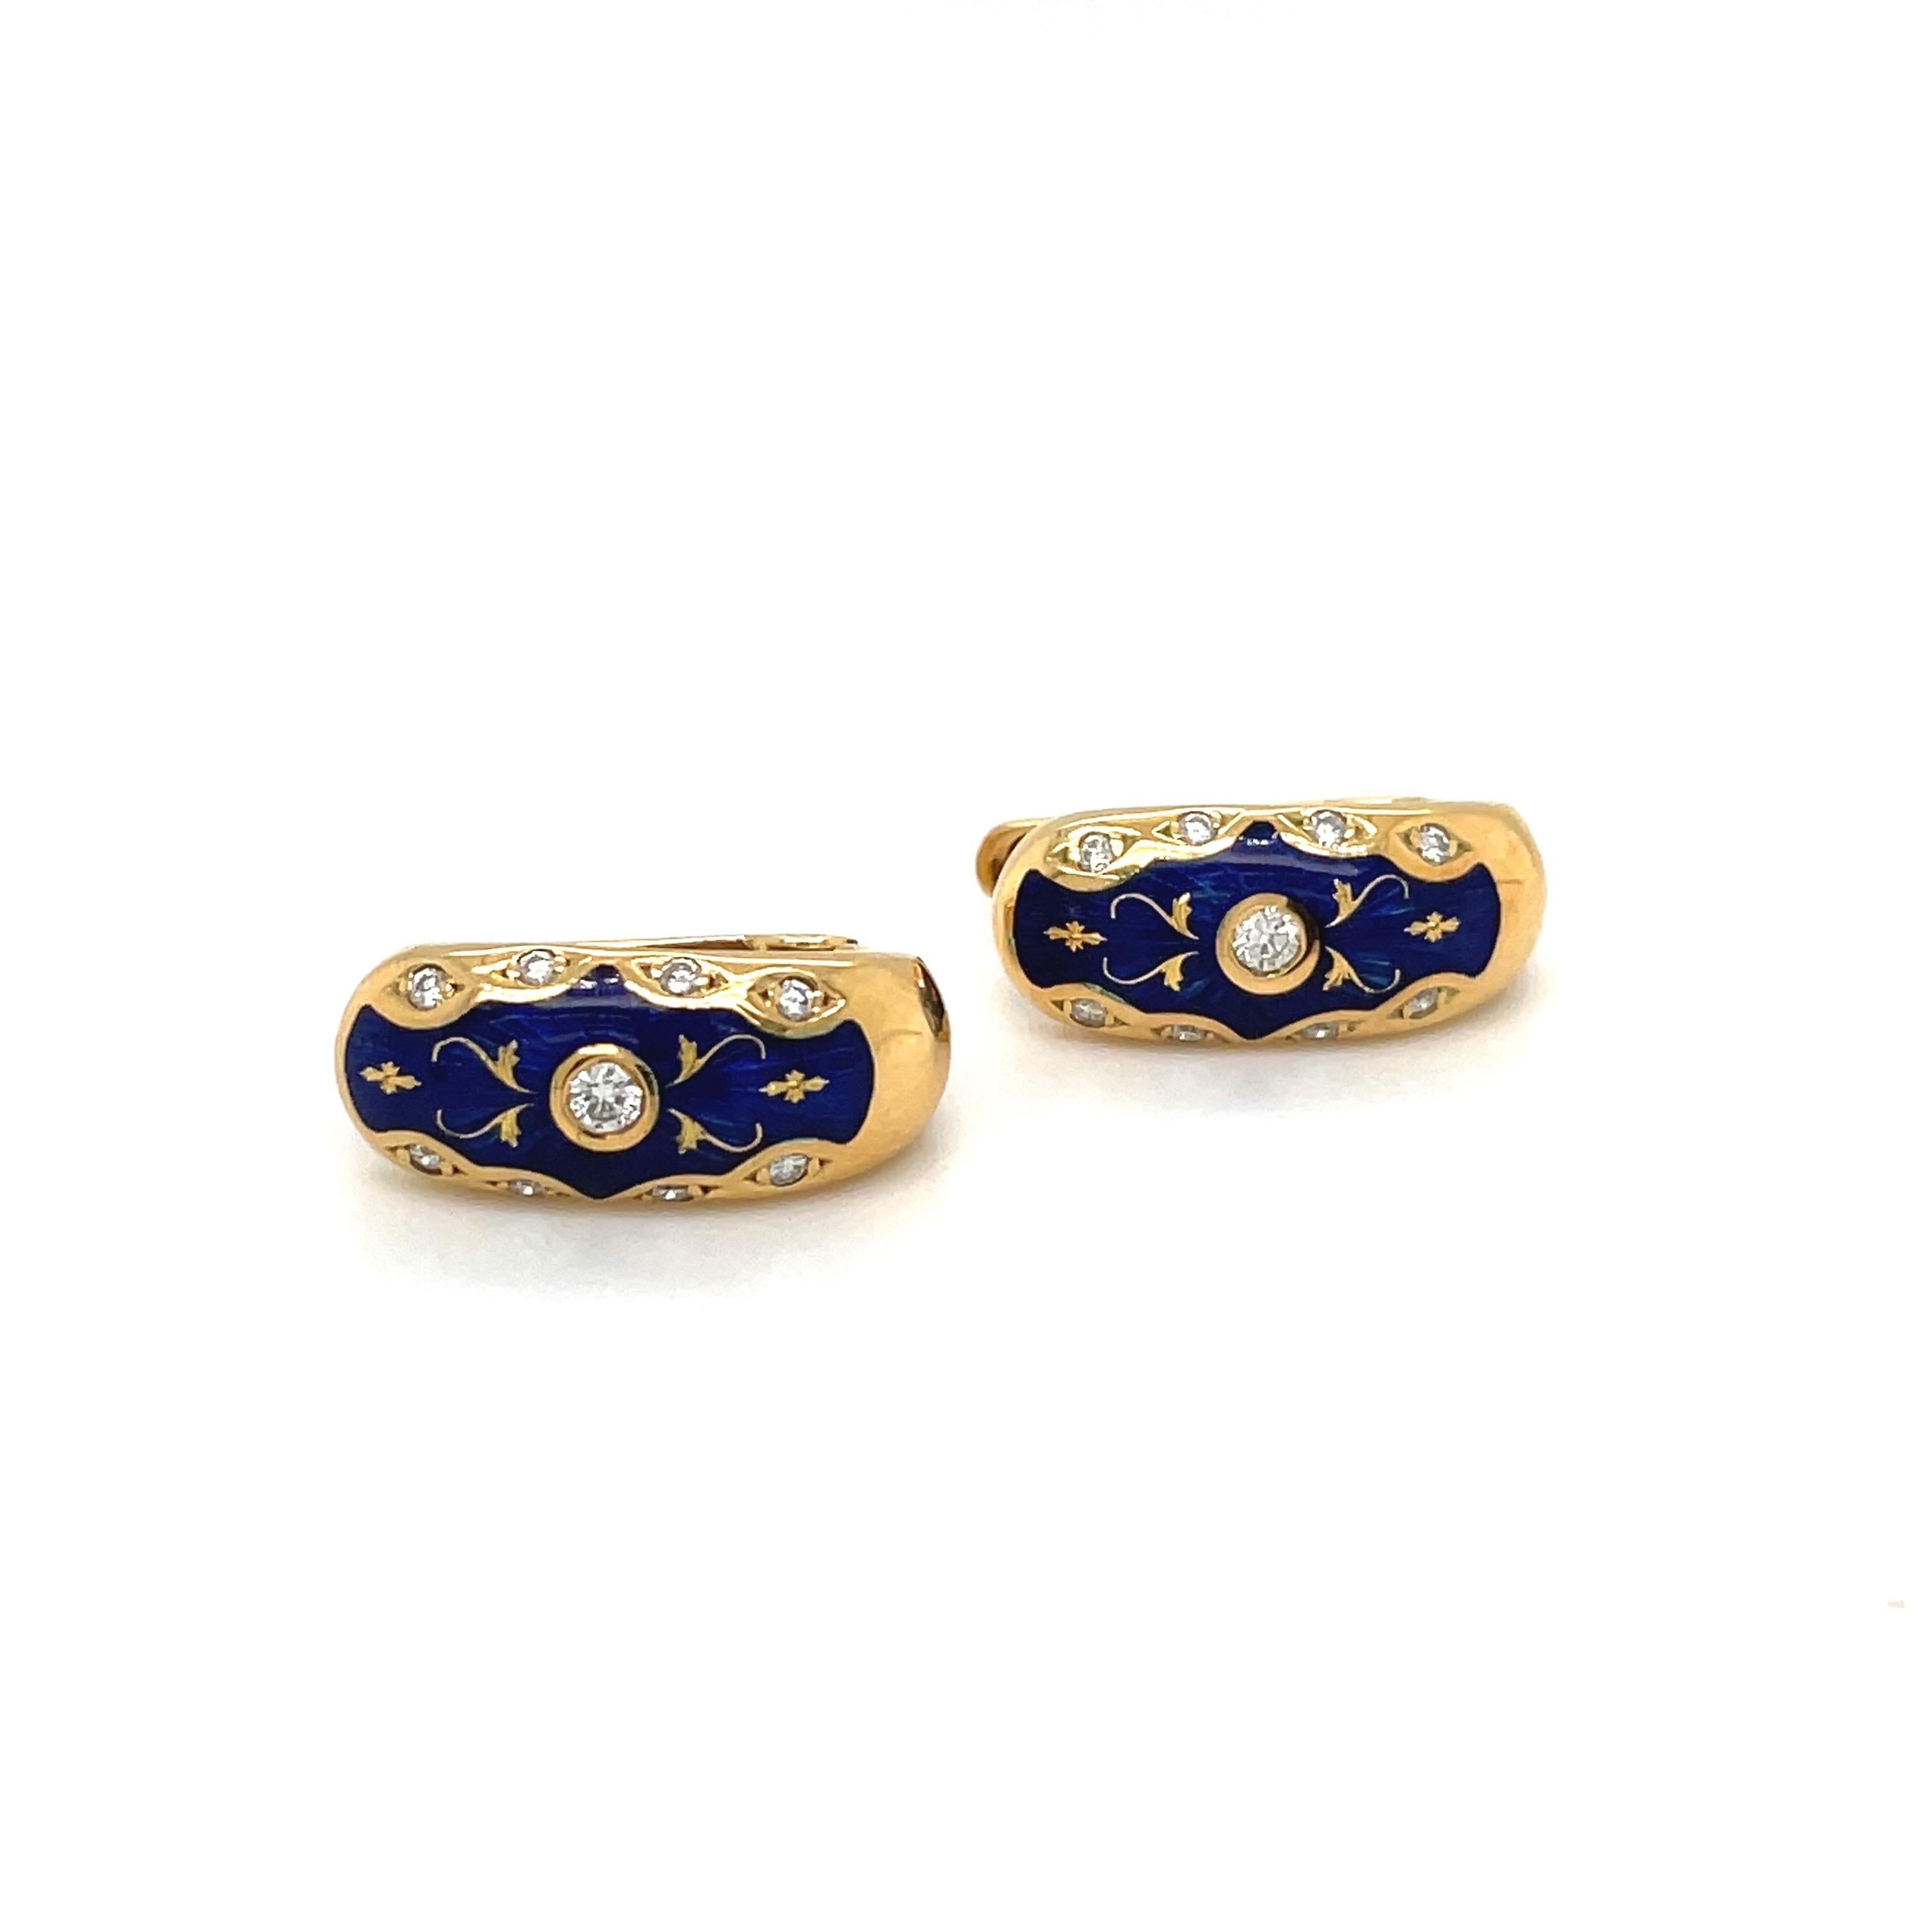 Round Cut Faberge 18kt Yellow Gold Diamond 0.24Cts. & Blue Enamel Huggy Earrings #51/300